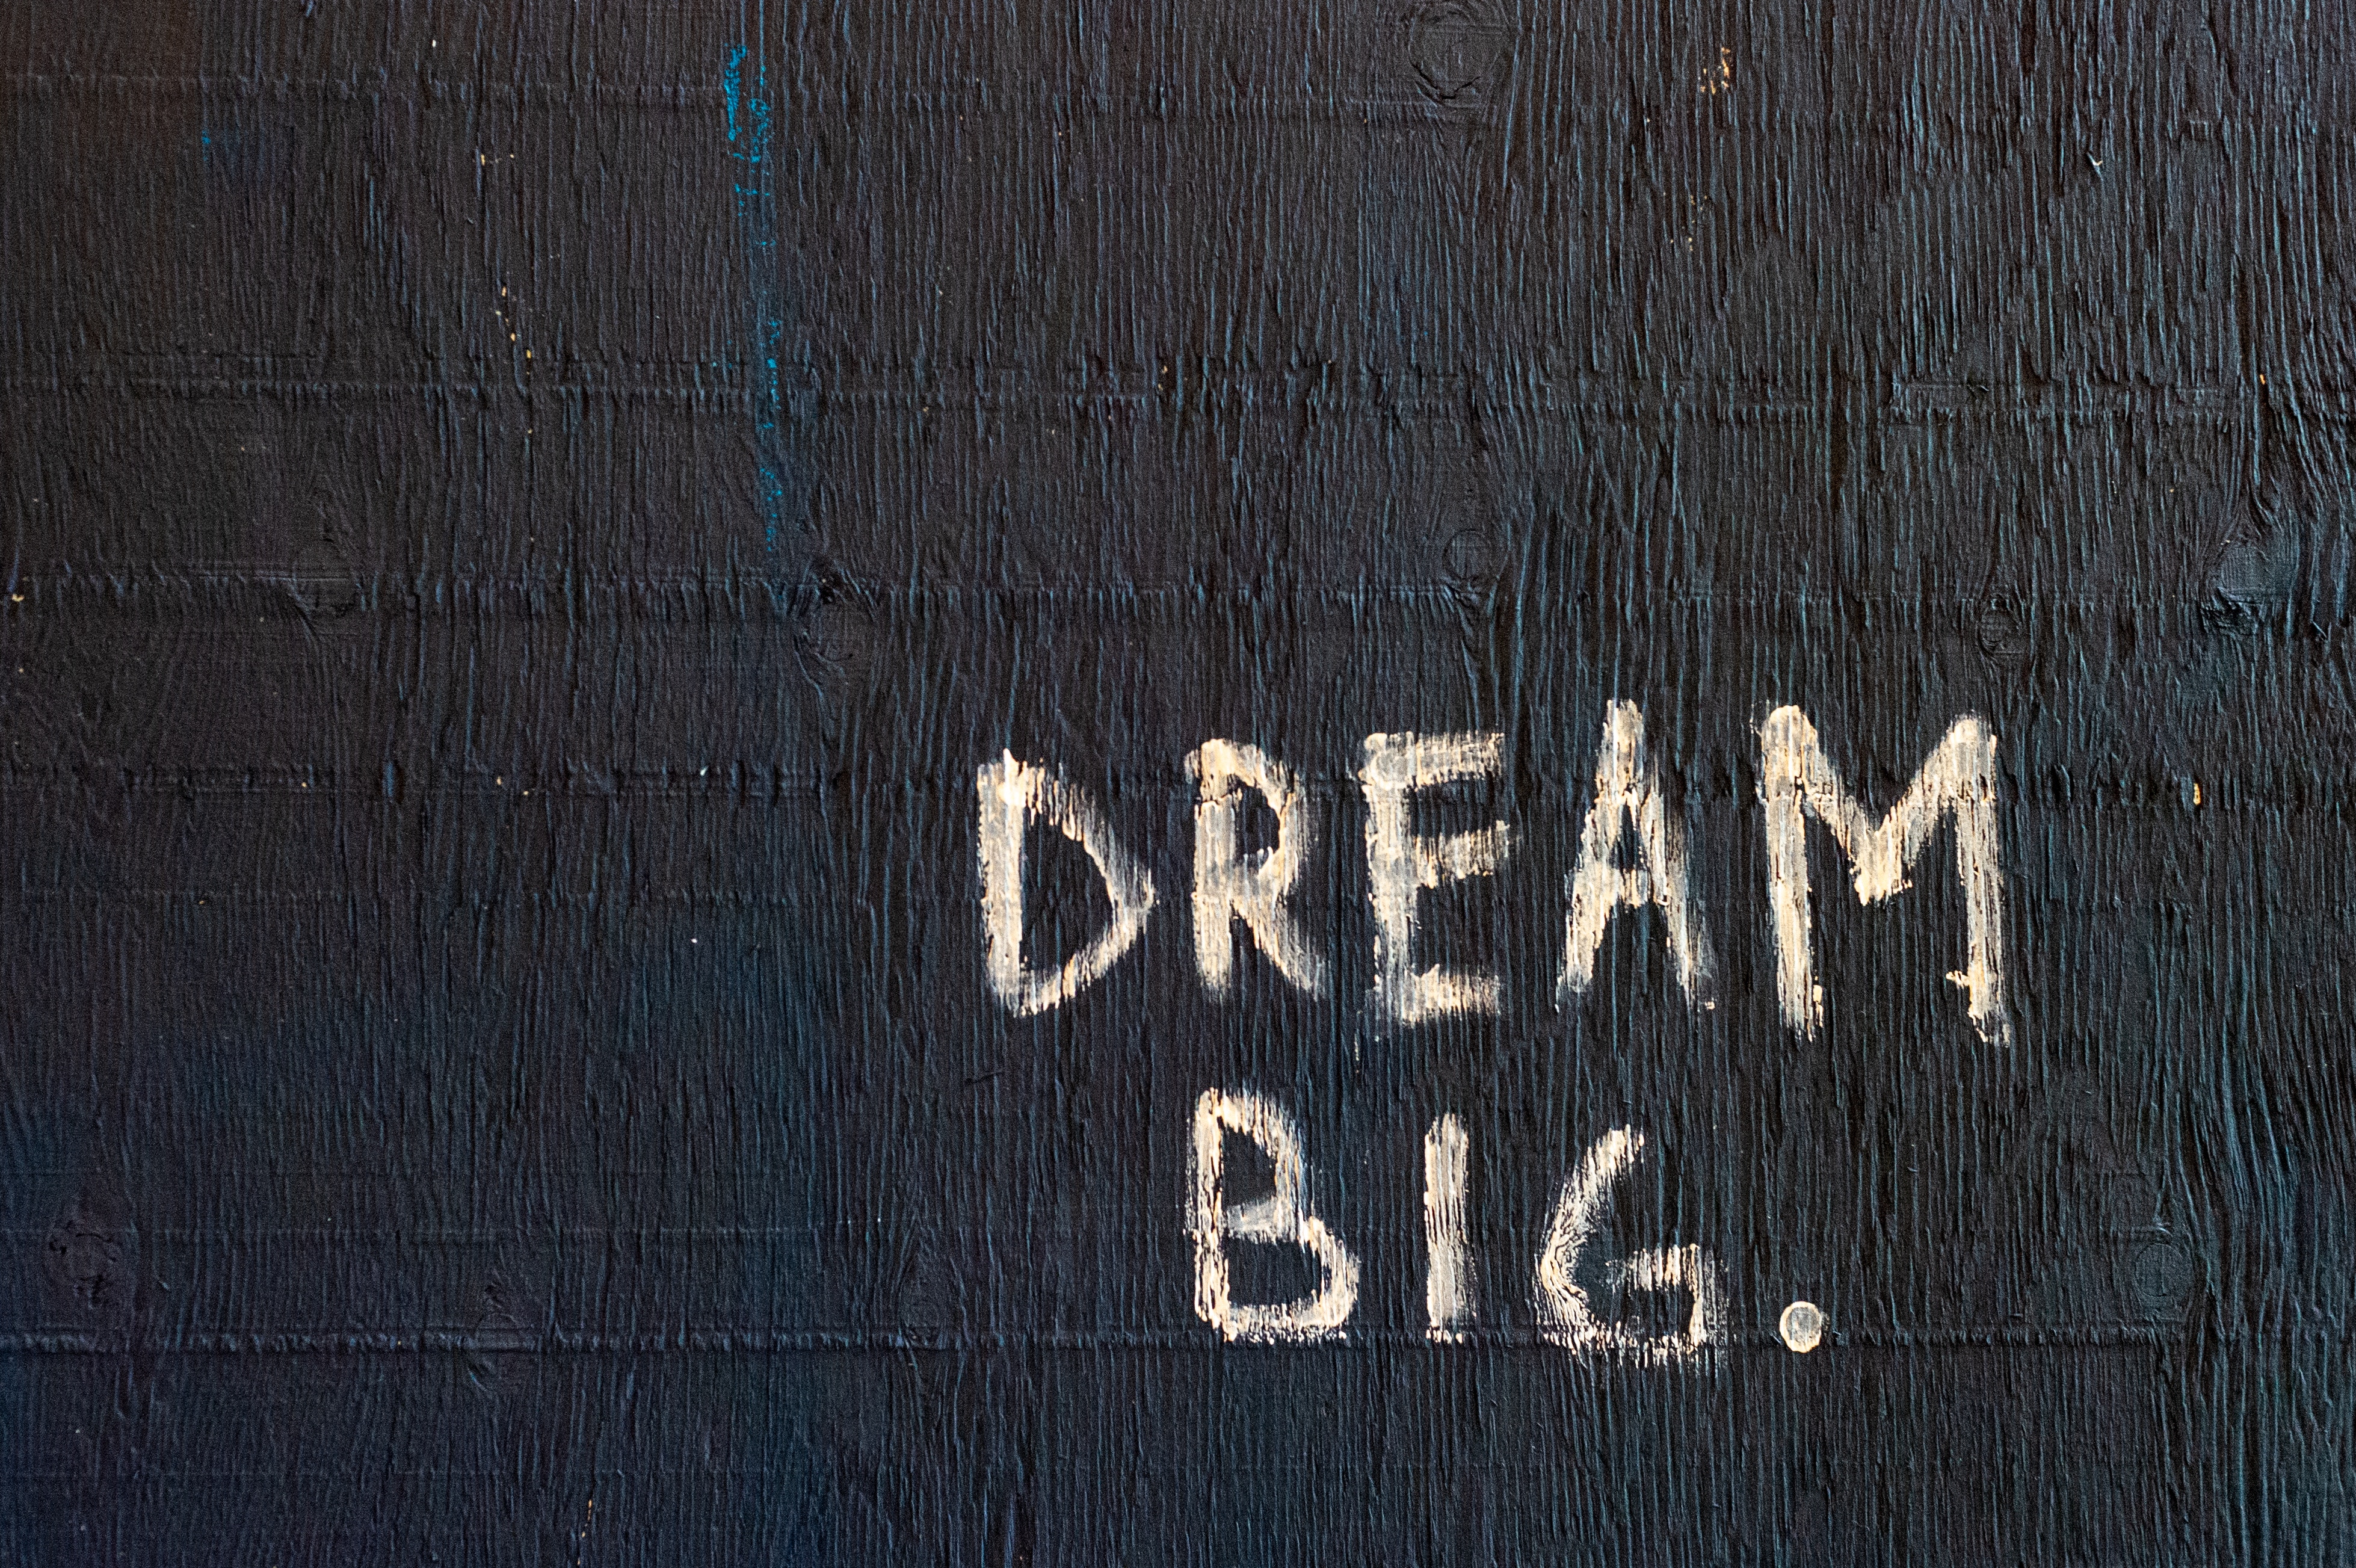 Dream Big Painted on a Wall by Randy Tarampi